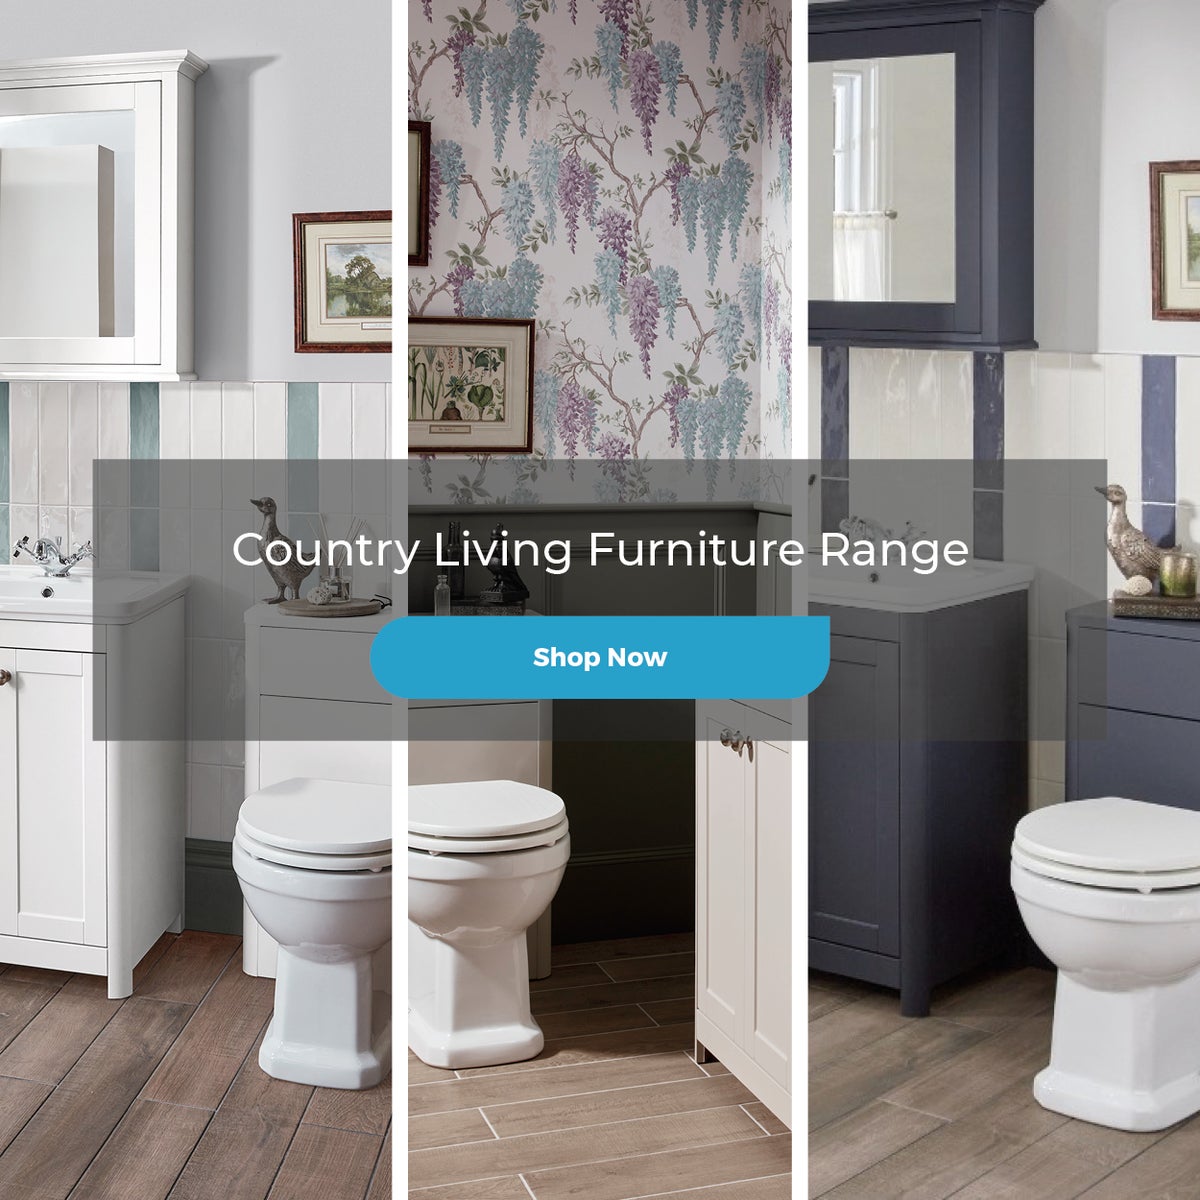 Country Living Furniture range